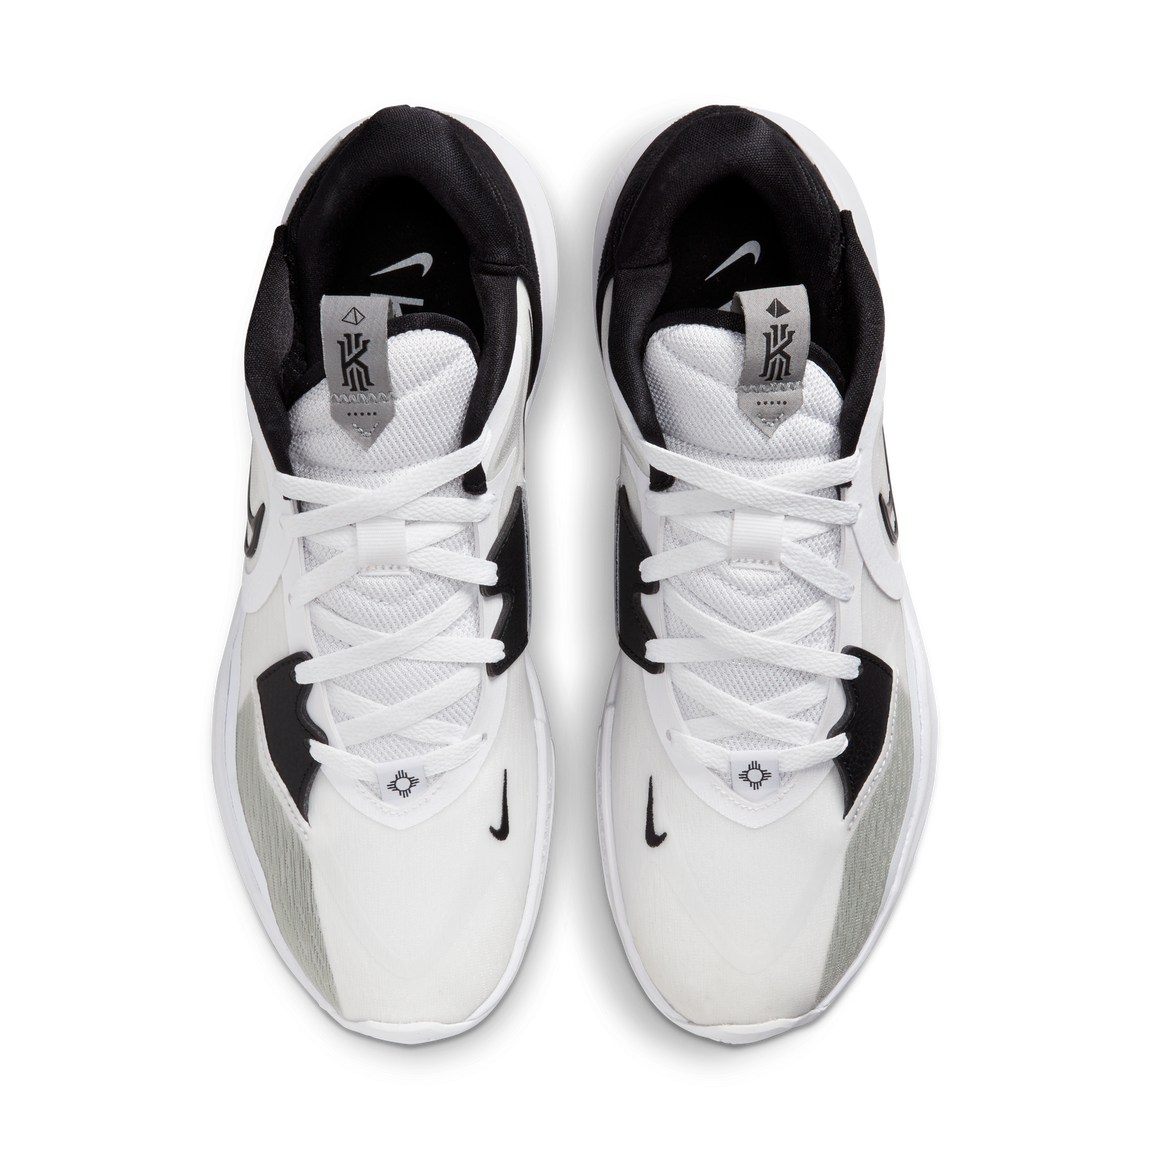 Nike Kyrie 5 Low (White/Black/White-Wolf Grey) - Nike Kyrie 5 Low (White/Black/White-Wolf Grey) - 